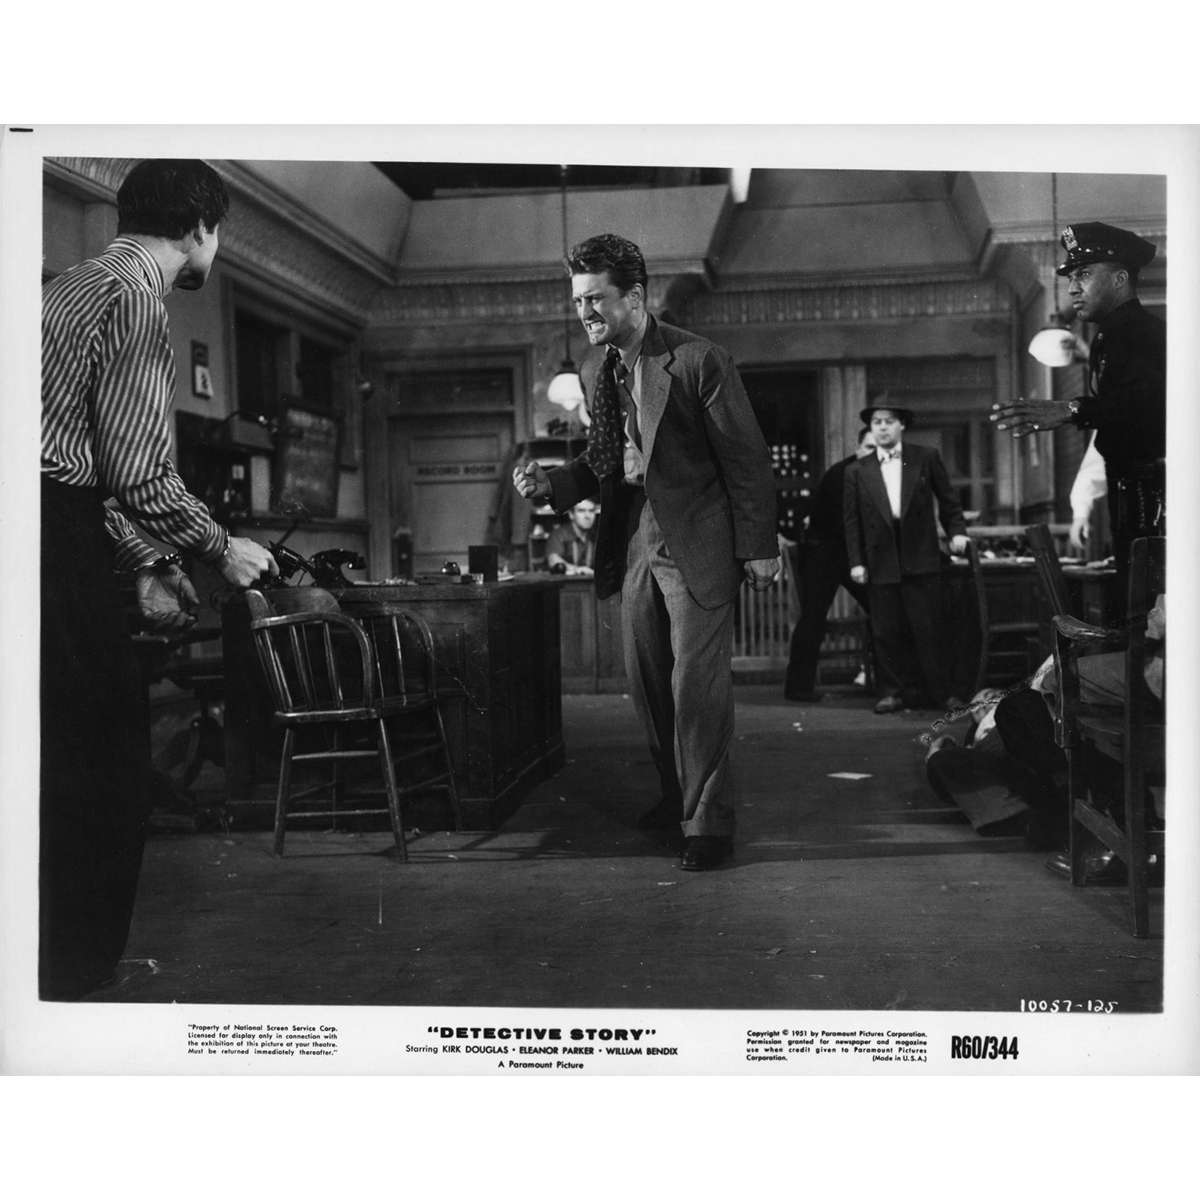 DETECTIVE STORY Movie Still 8x10 in. USA - R1960 - William Wyler, Kirk Douglas